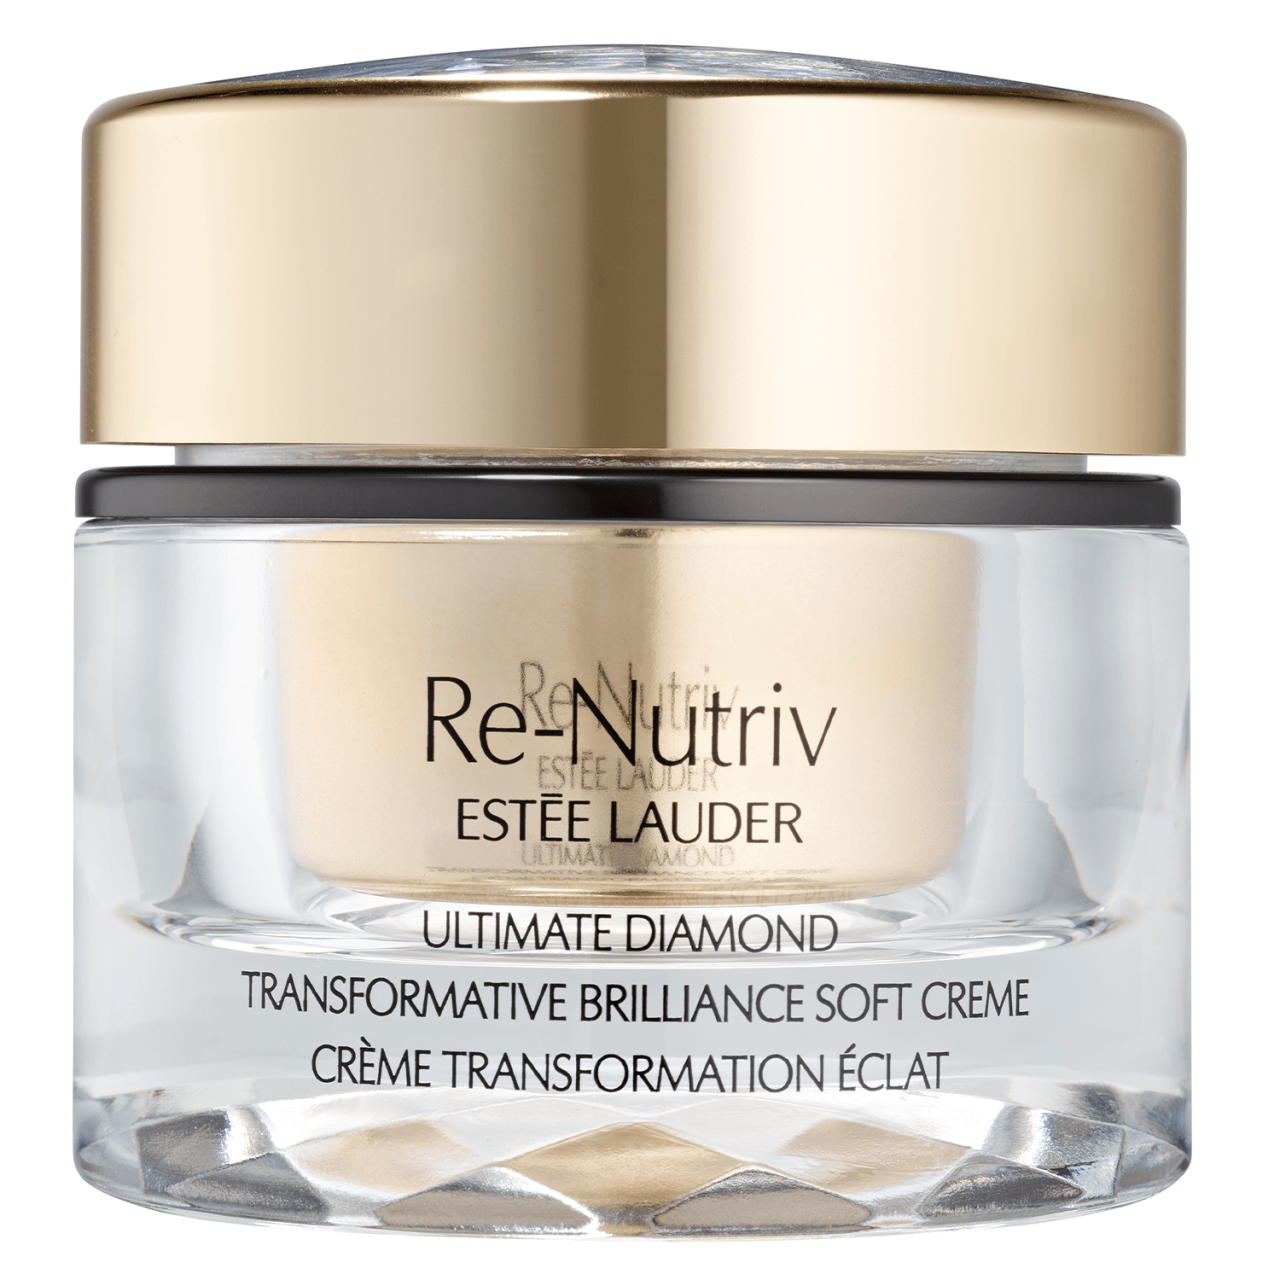 Re-Nutriv - Ultimate Diamond Trasformative Brilliance Soft Crème von Estée Lauder